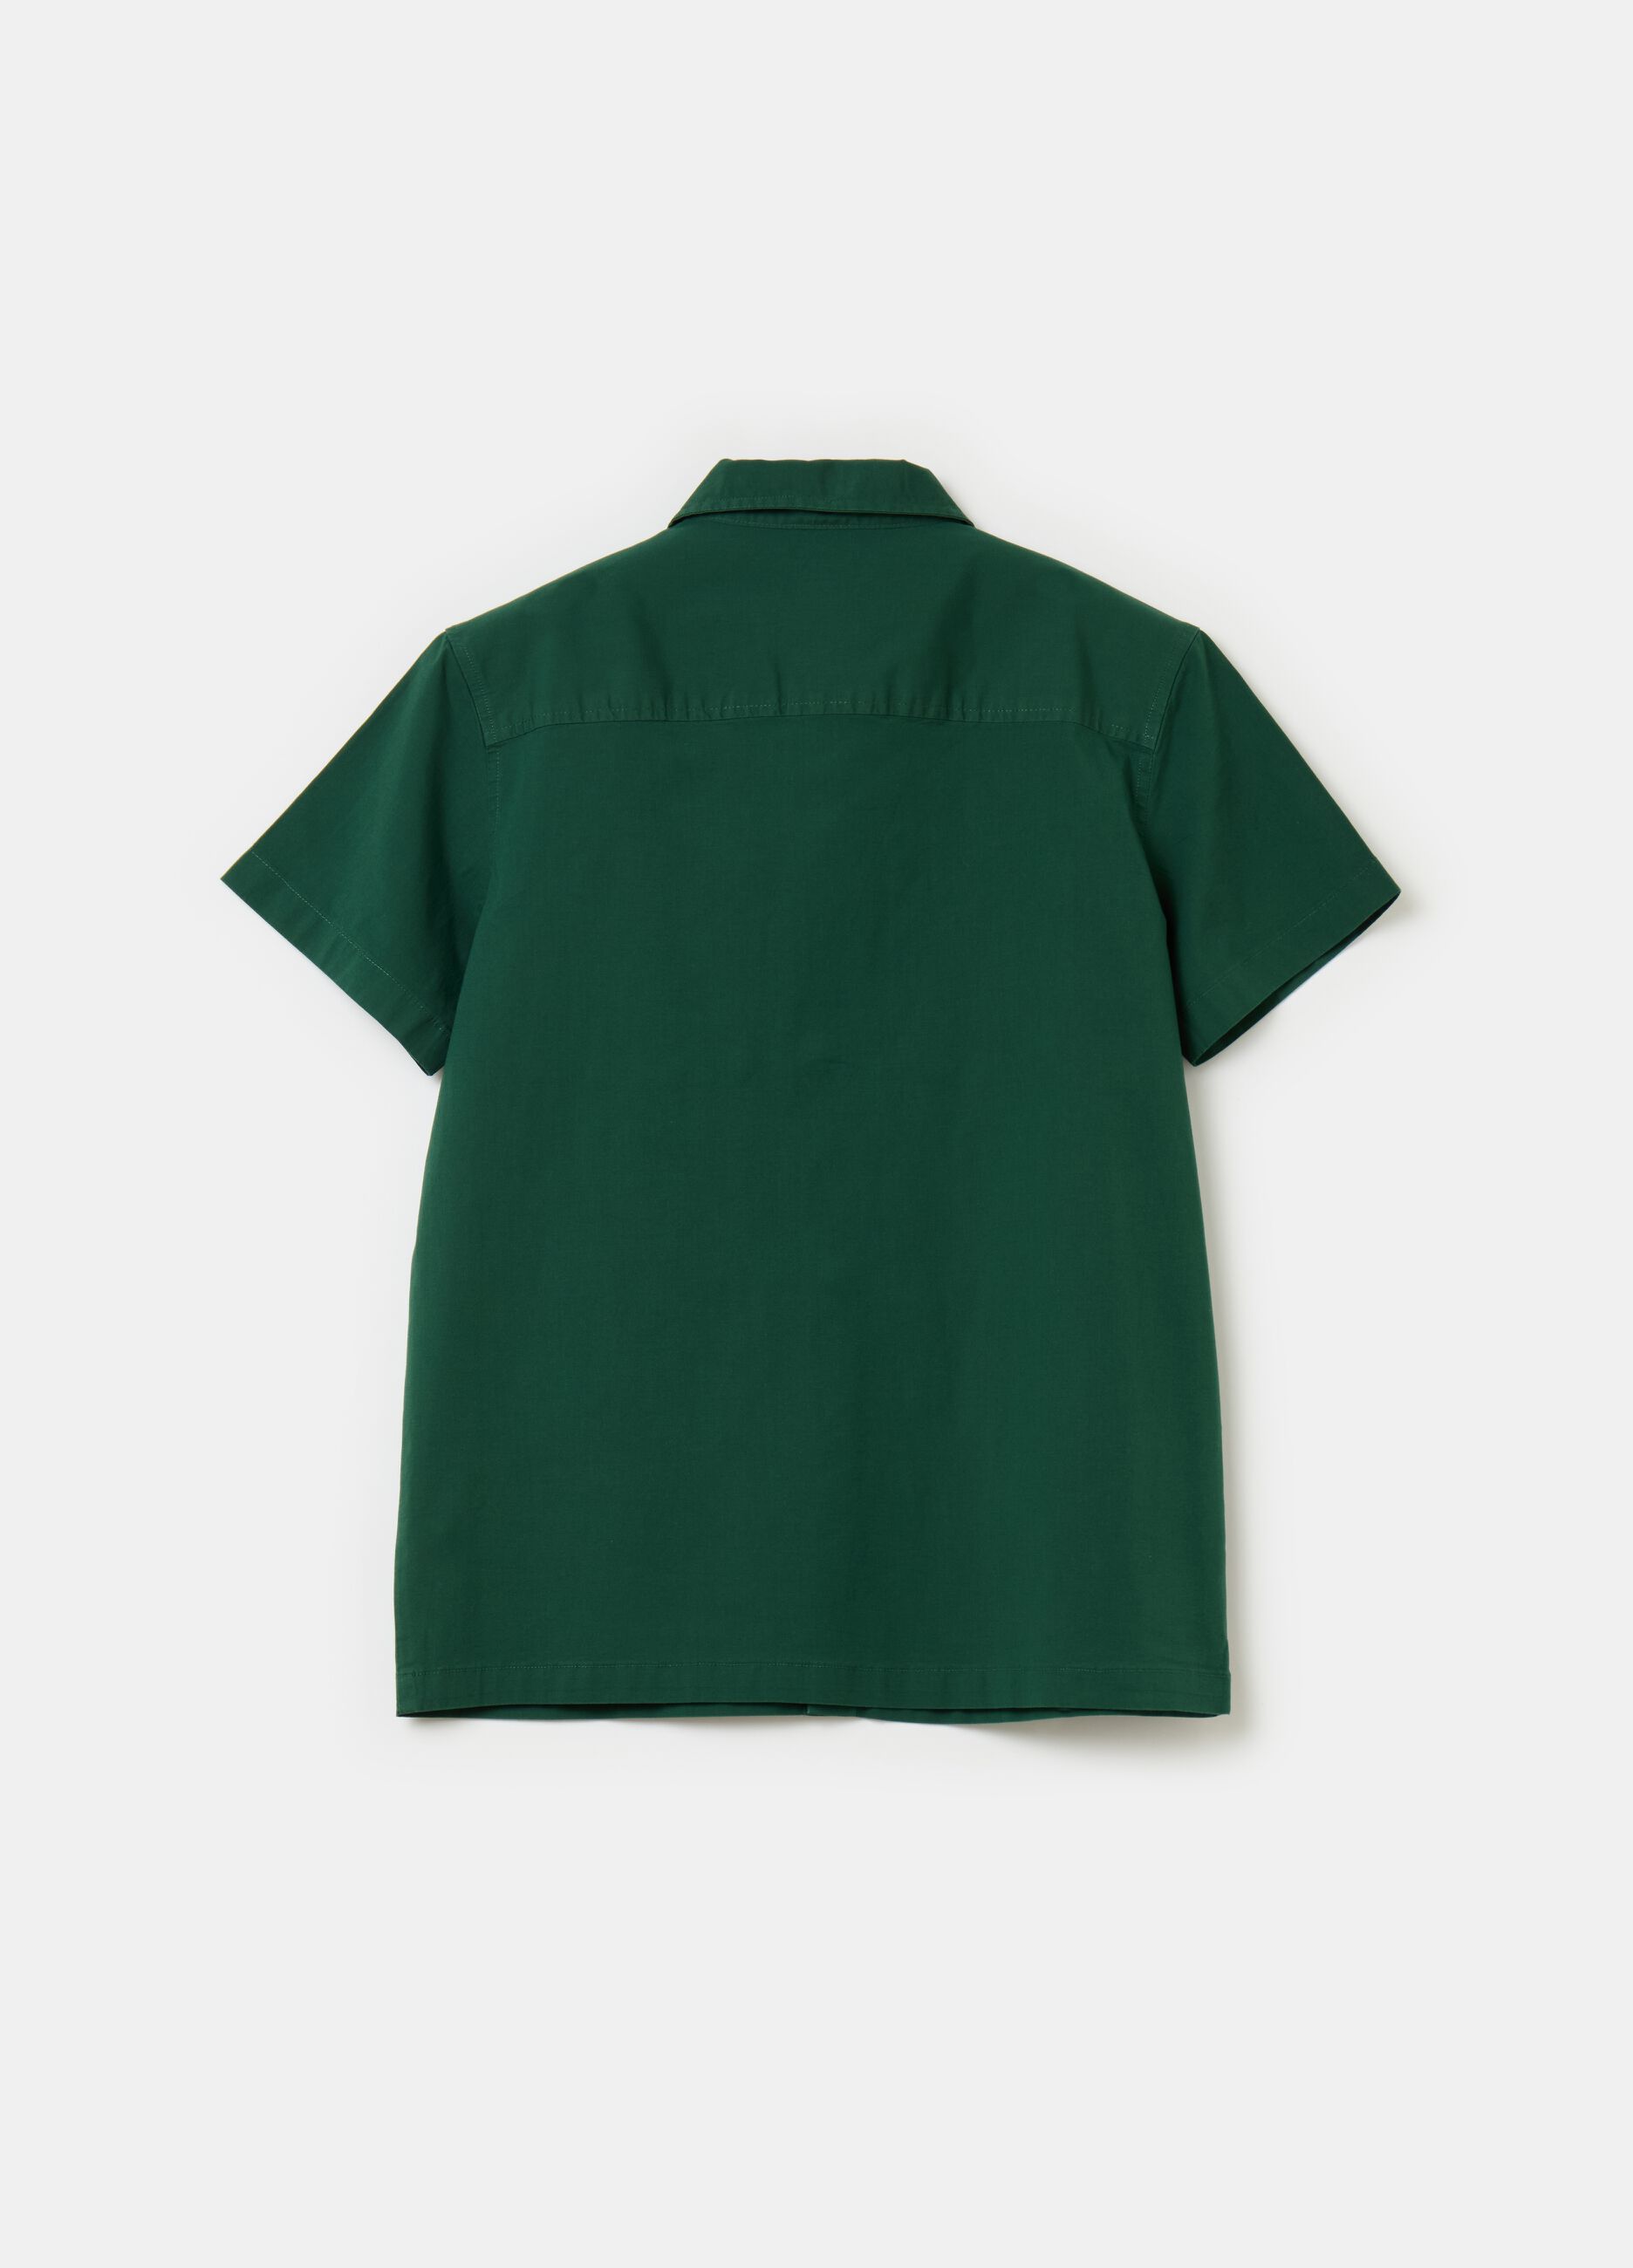 Poplin shirt with pockets